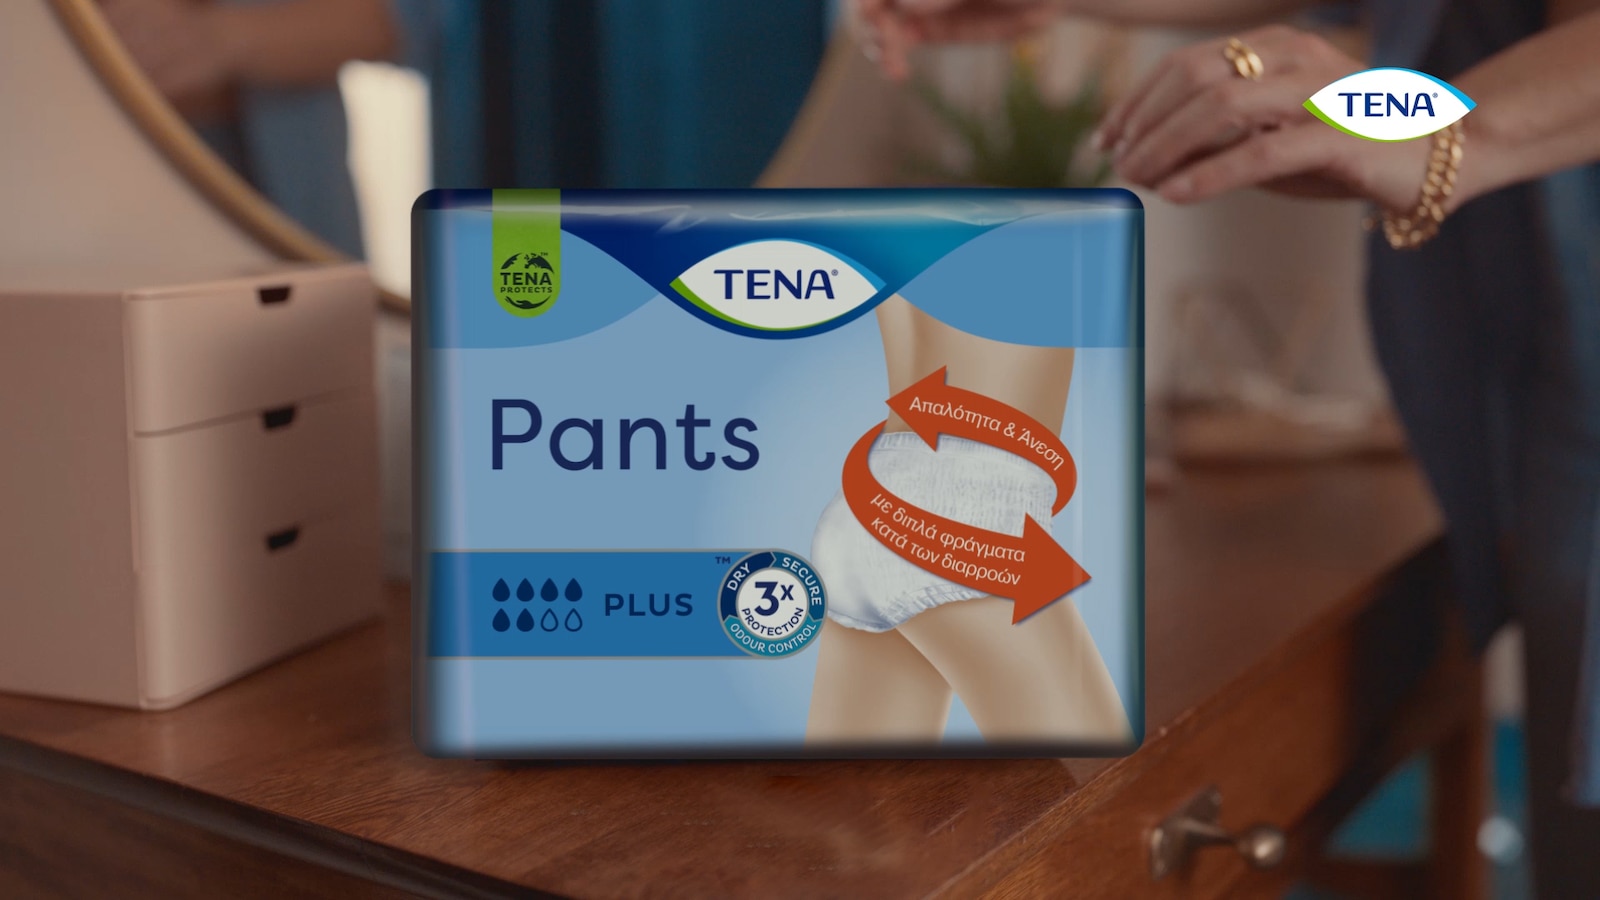 TENA Pants Plus. Η νέα του εικόνα ήρθε να ενισχύσει όλα τα πλεονεκτήματα που έχει αυτό το προϊόν.